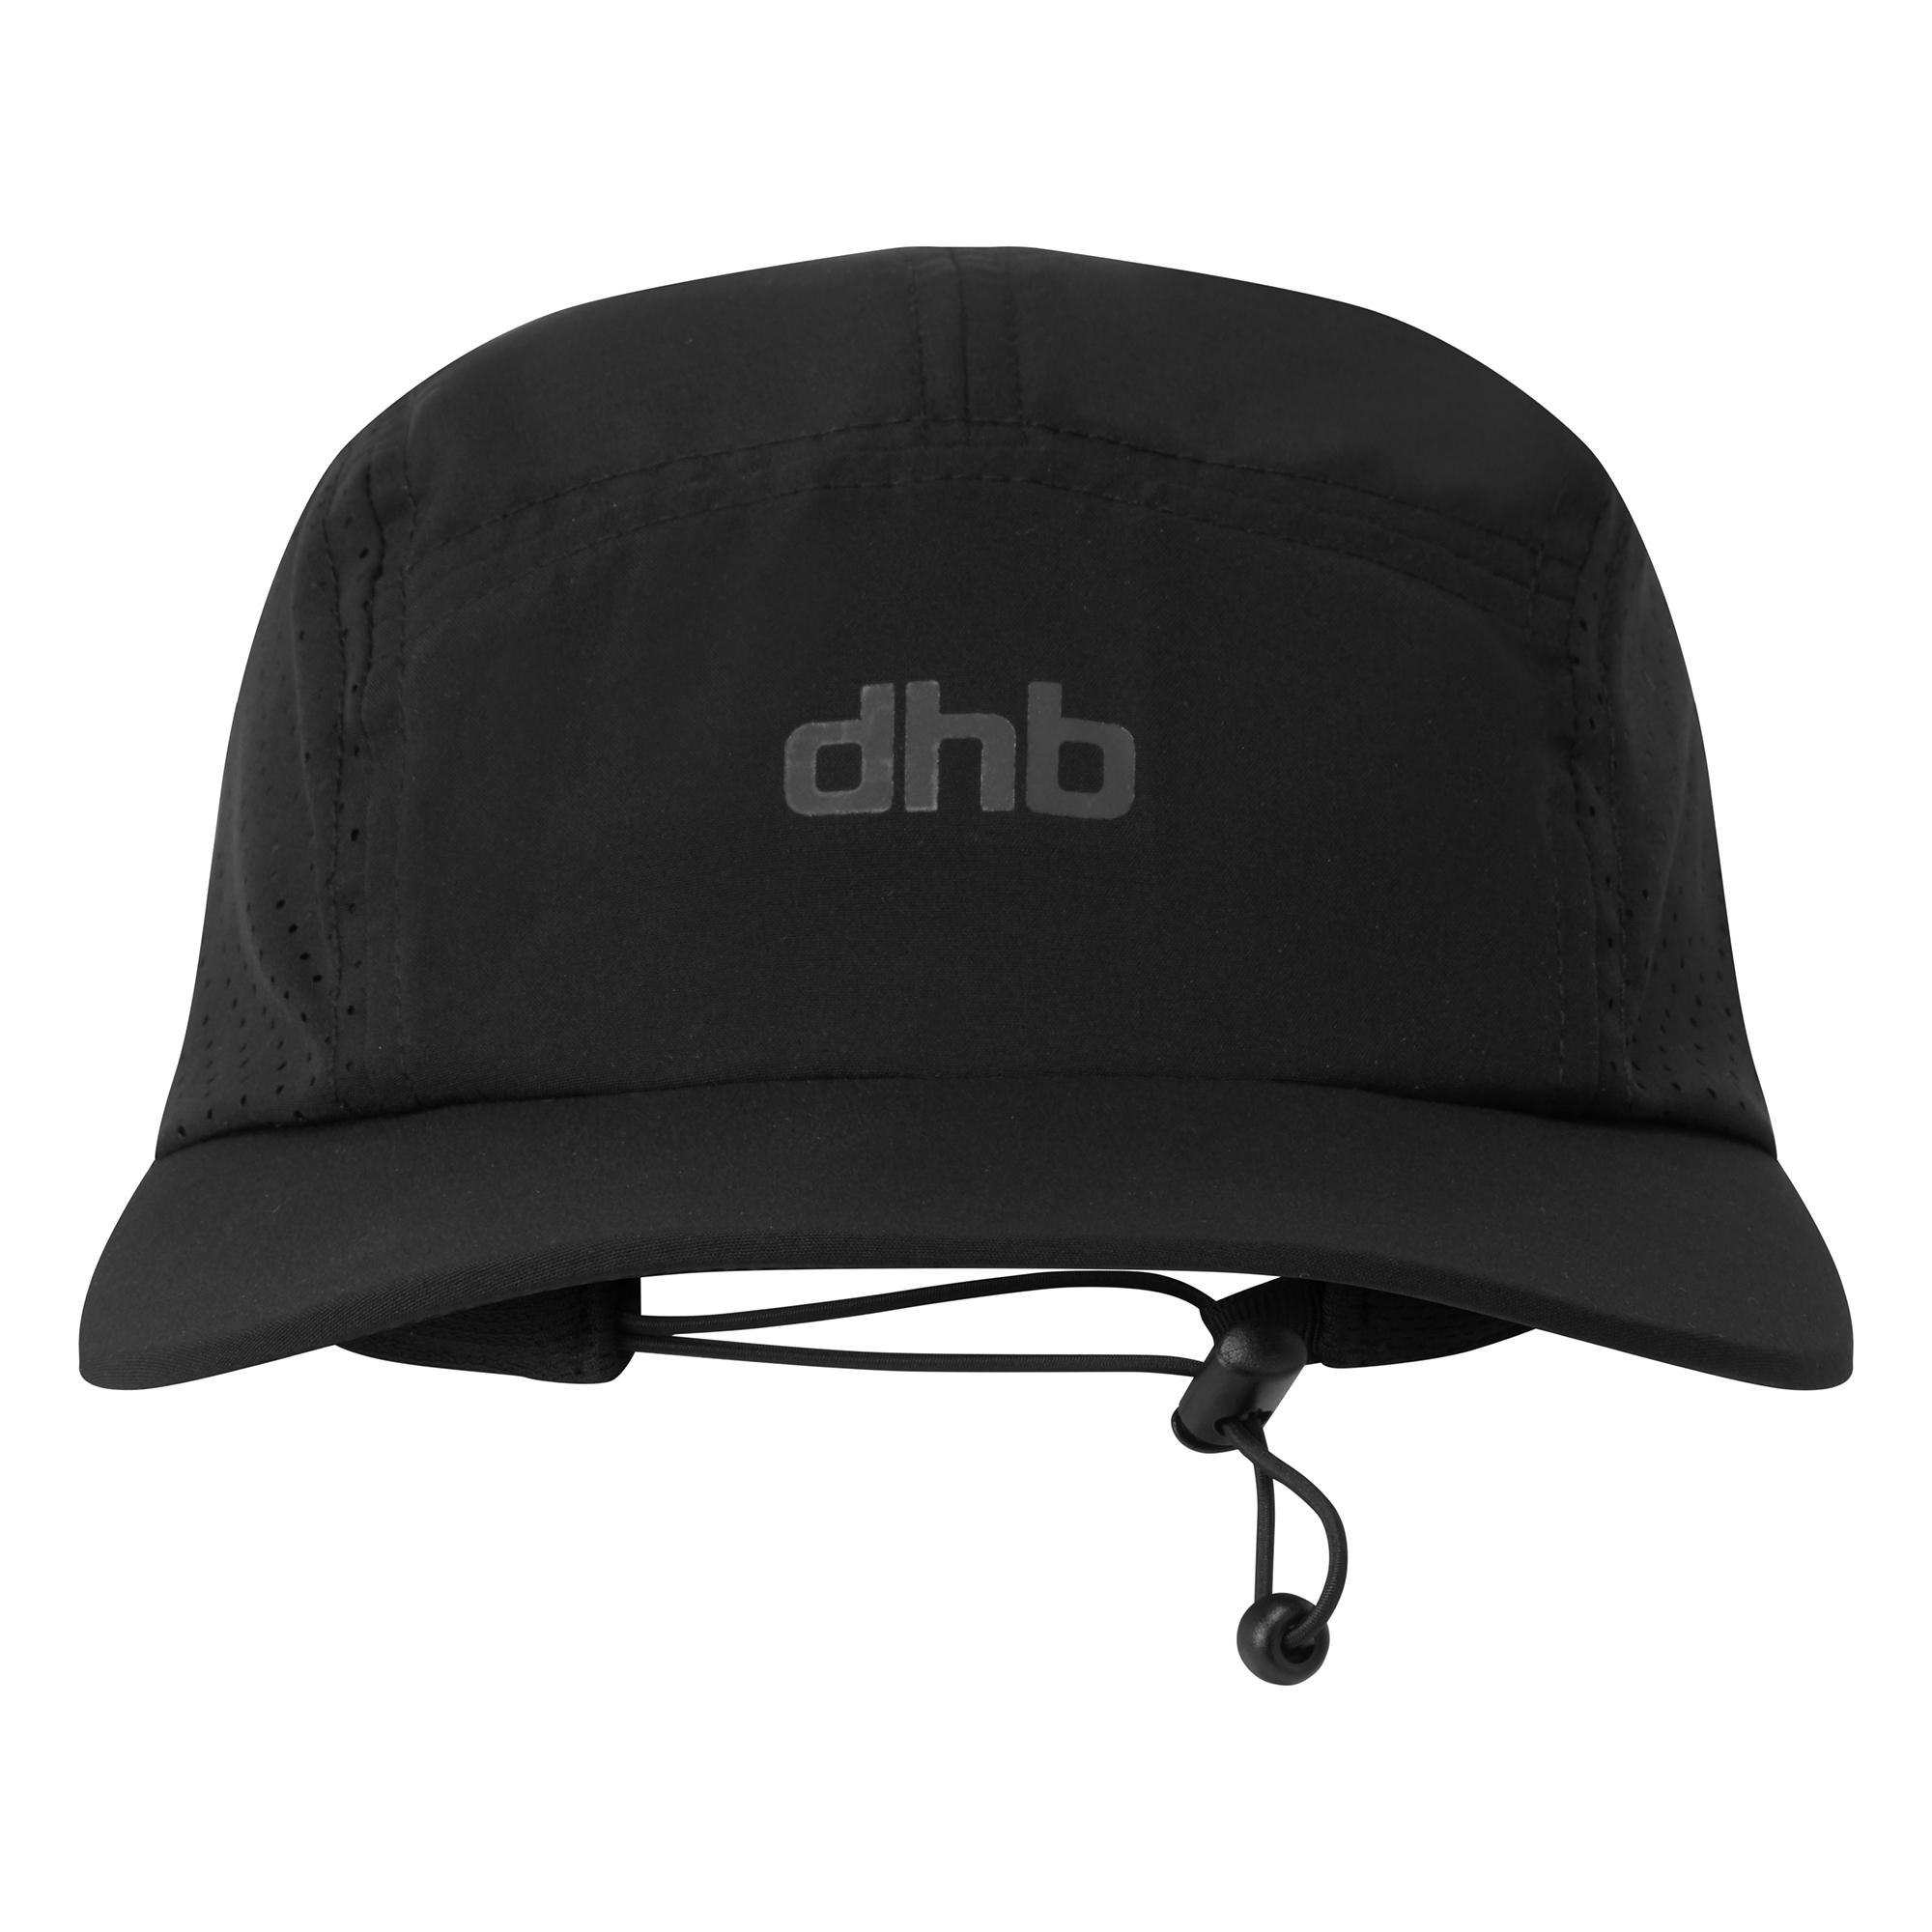 Dhb Aeron Ultra Race Cap - Black